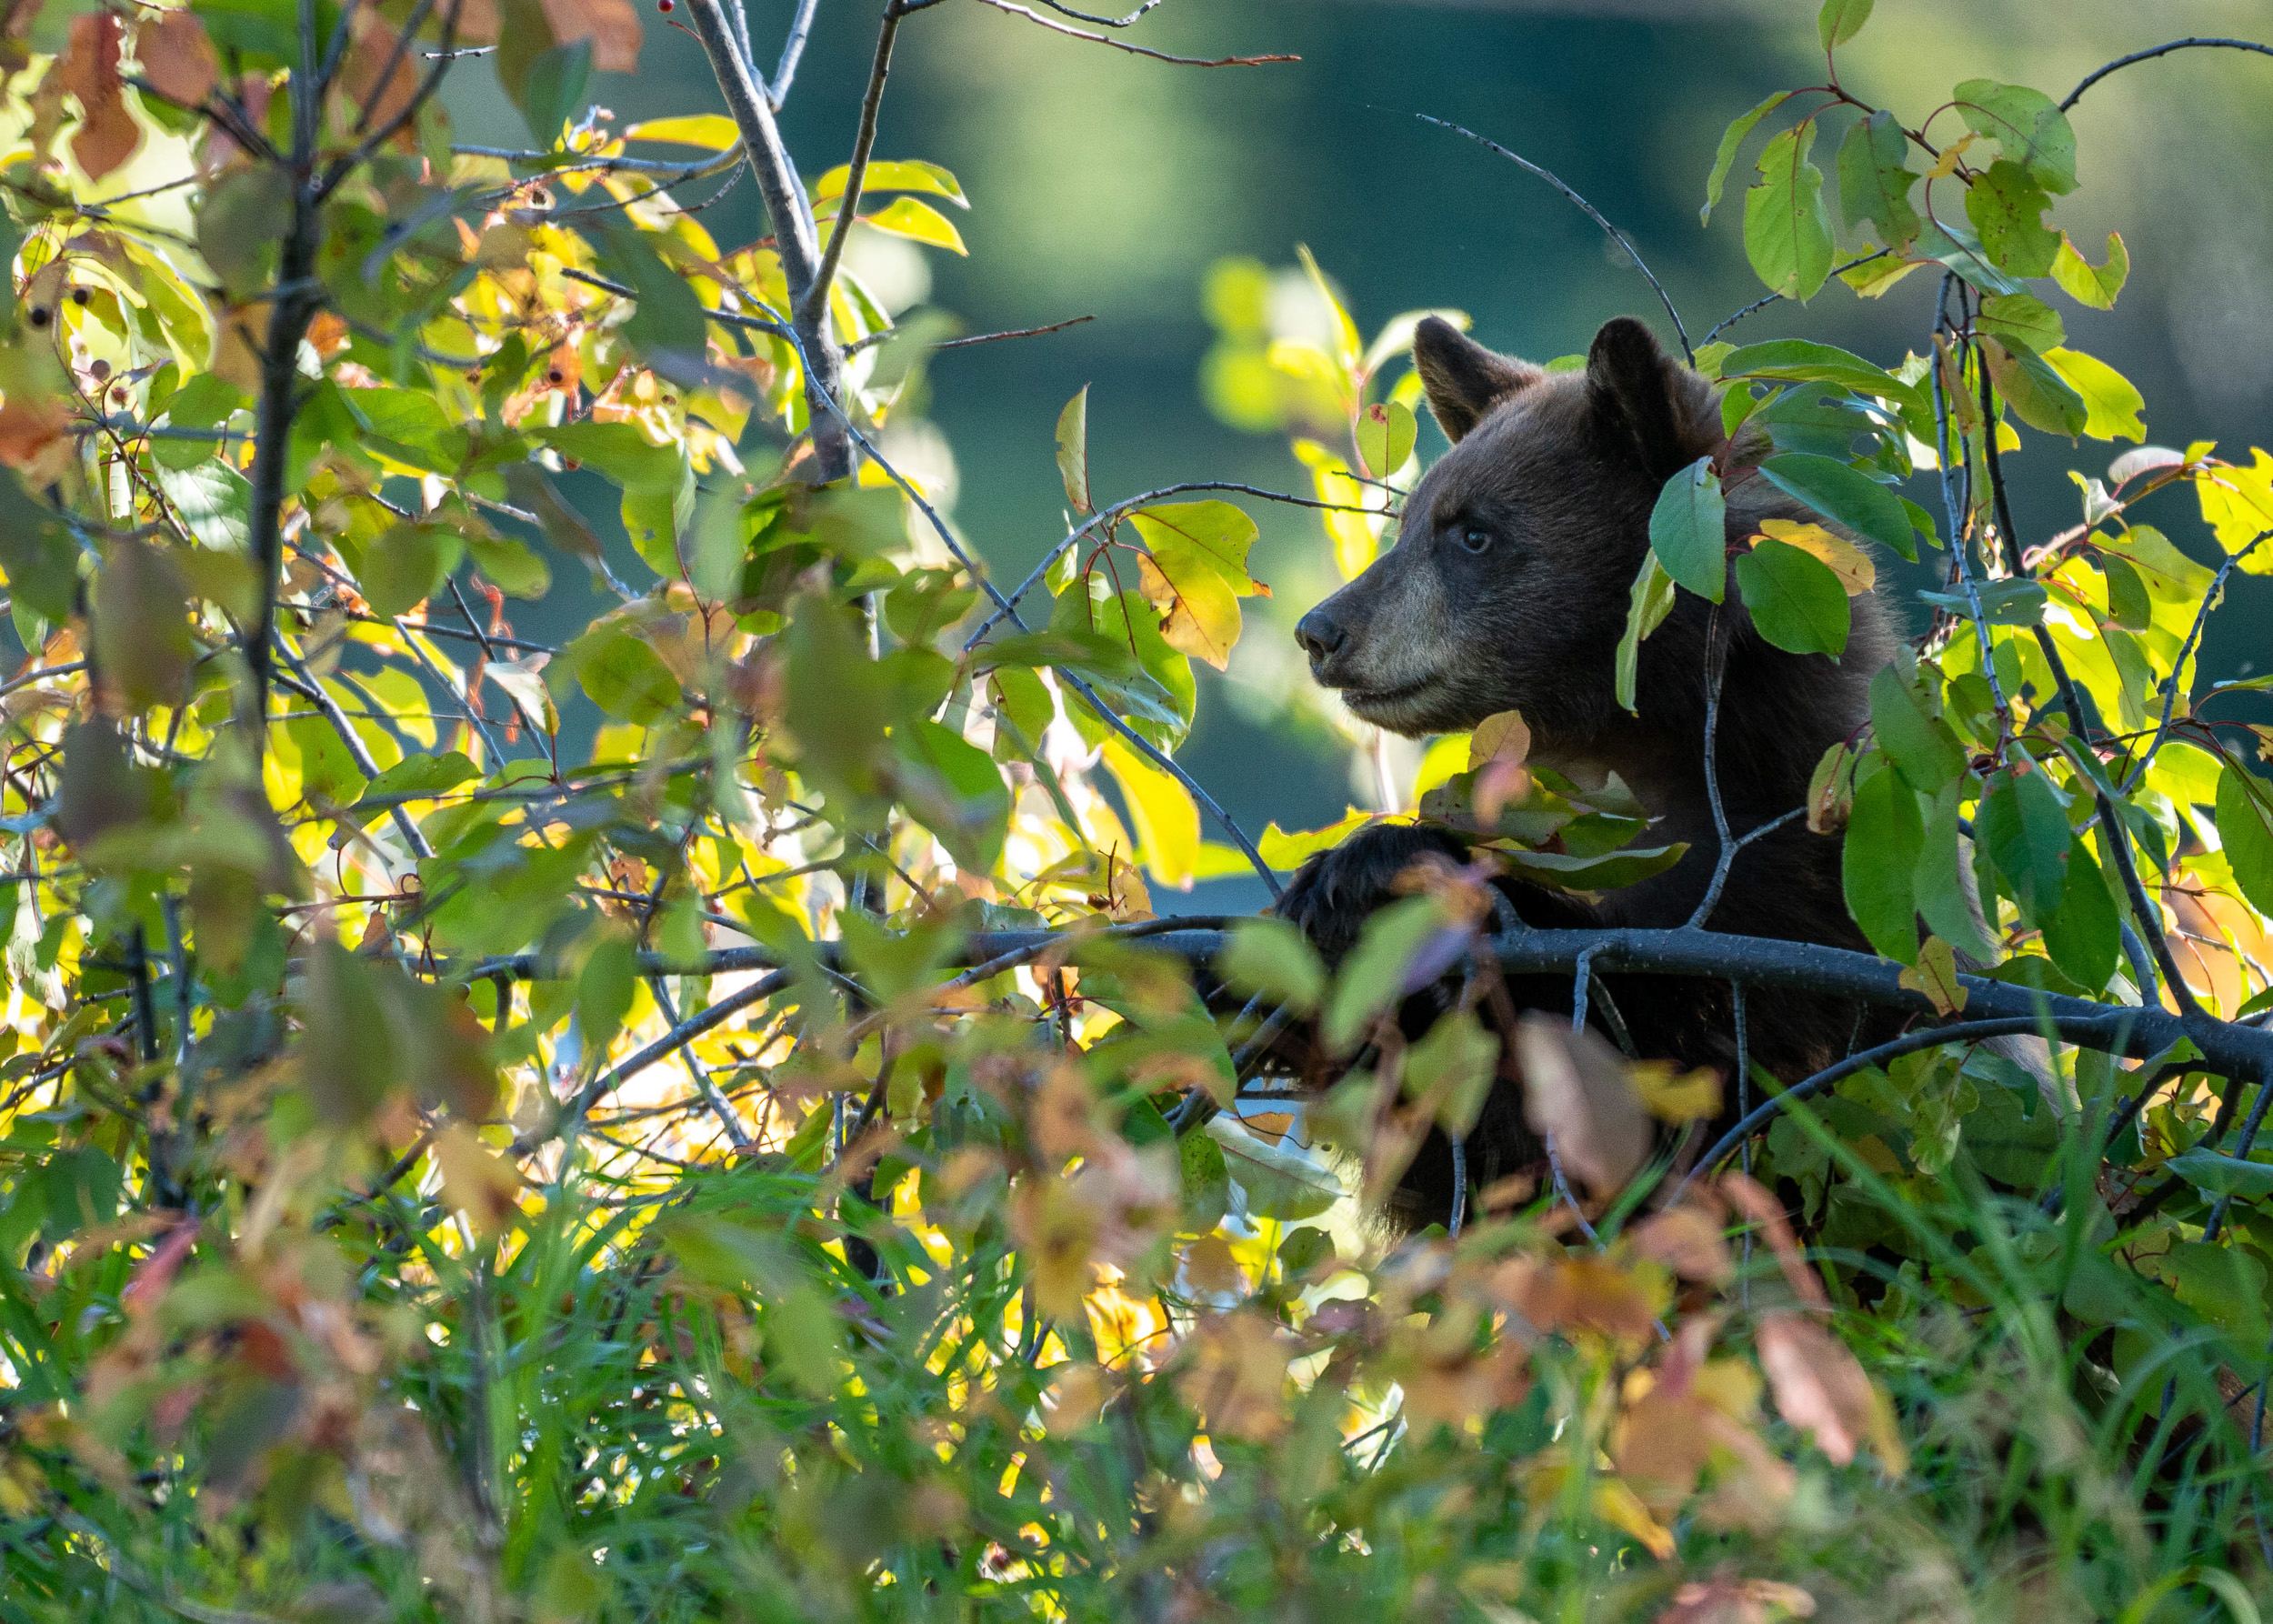 A young black bear cub in a berry bush